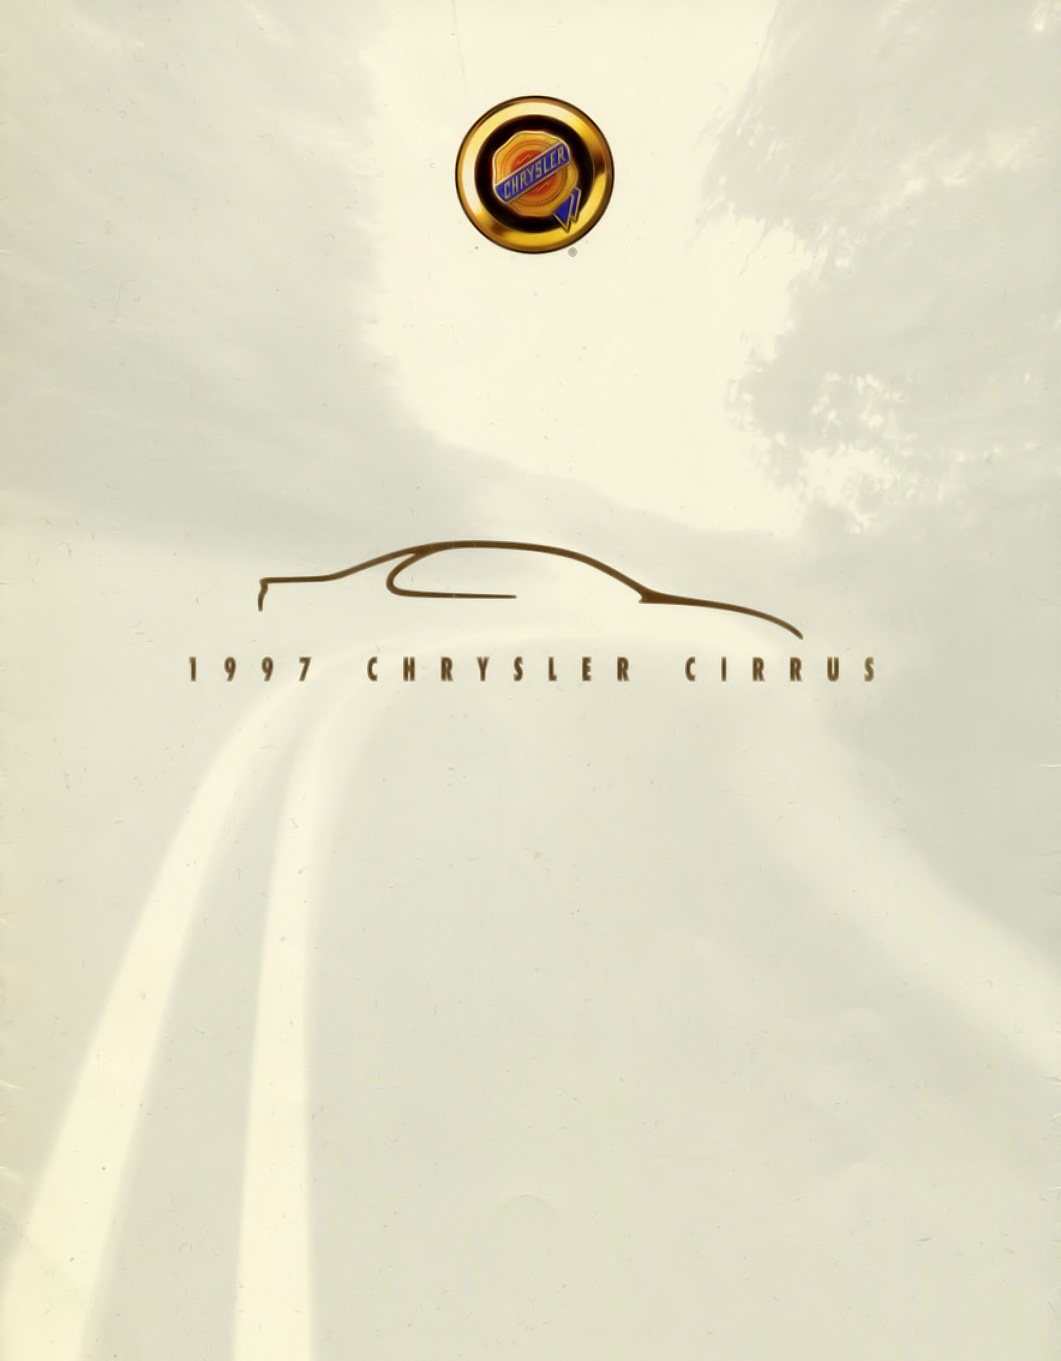 1997 Chrysler Cirrus-01